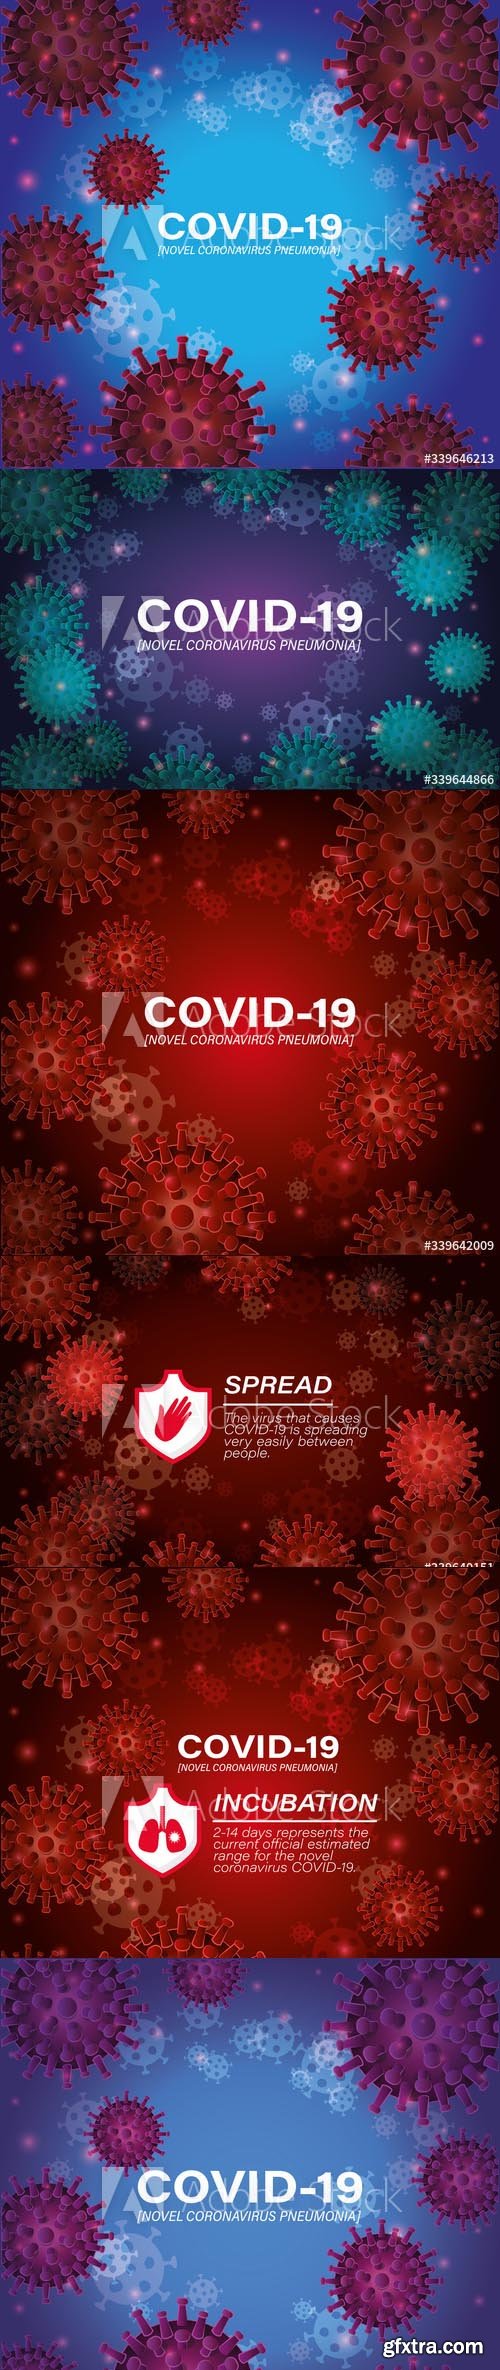 Covid-19 Coronavirus Illustrations